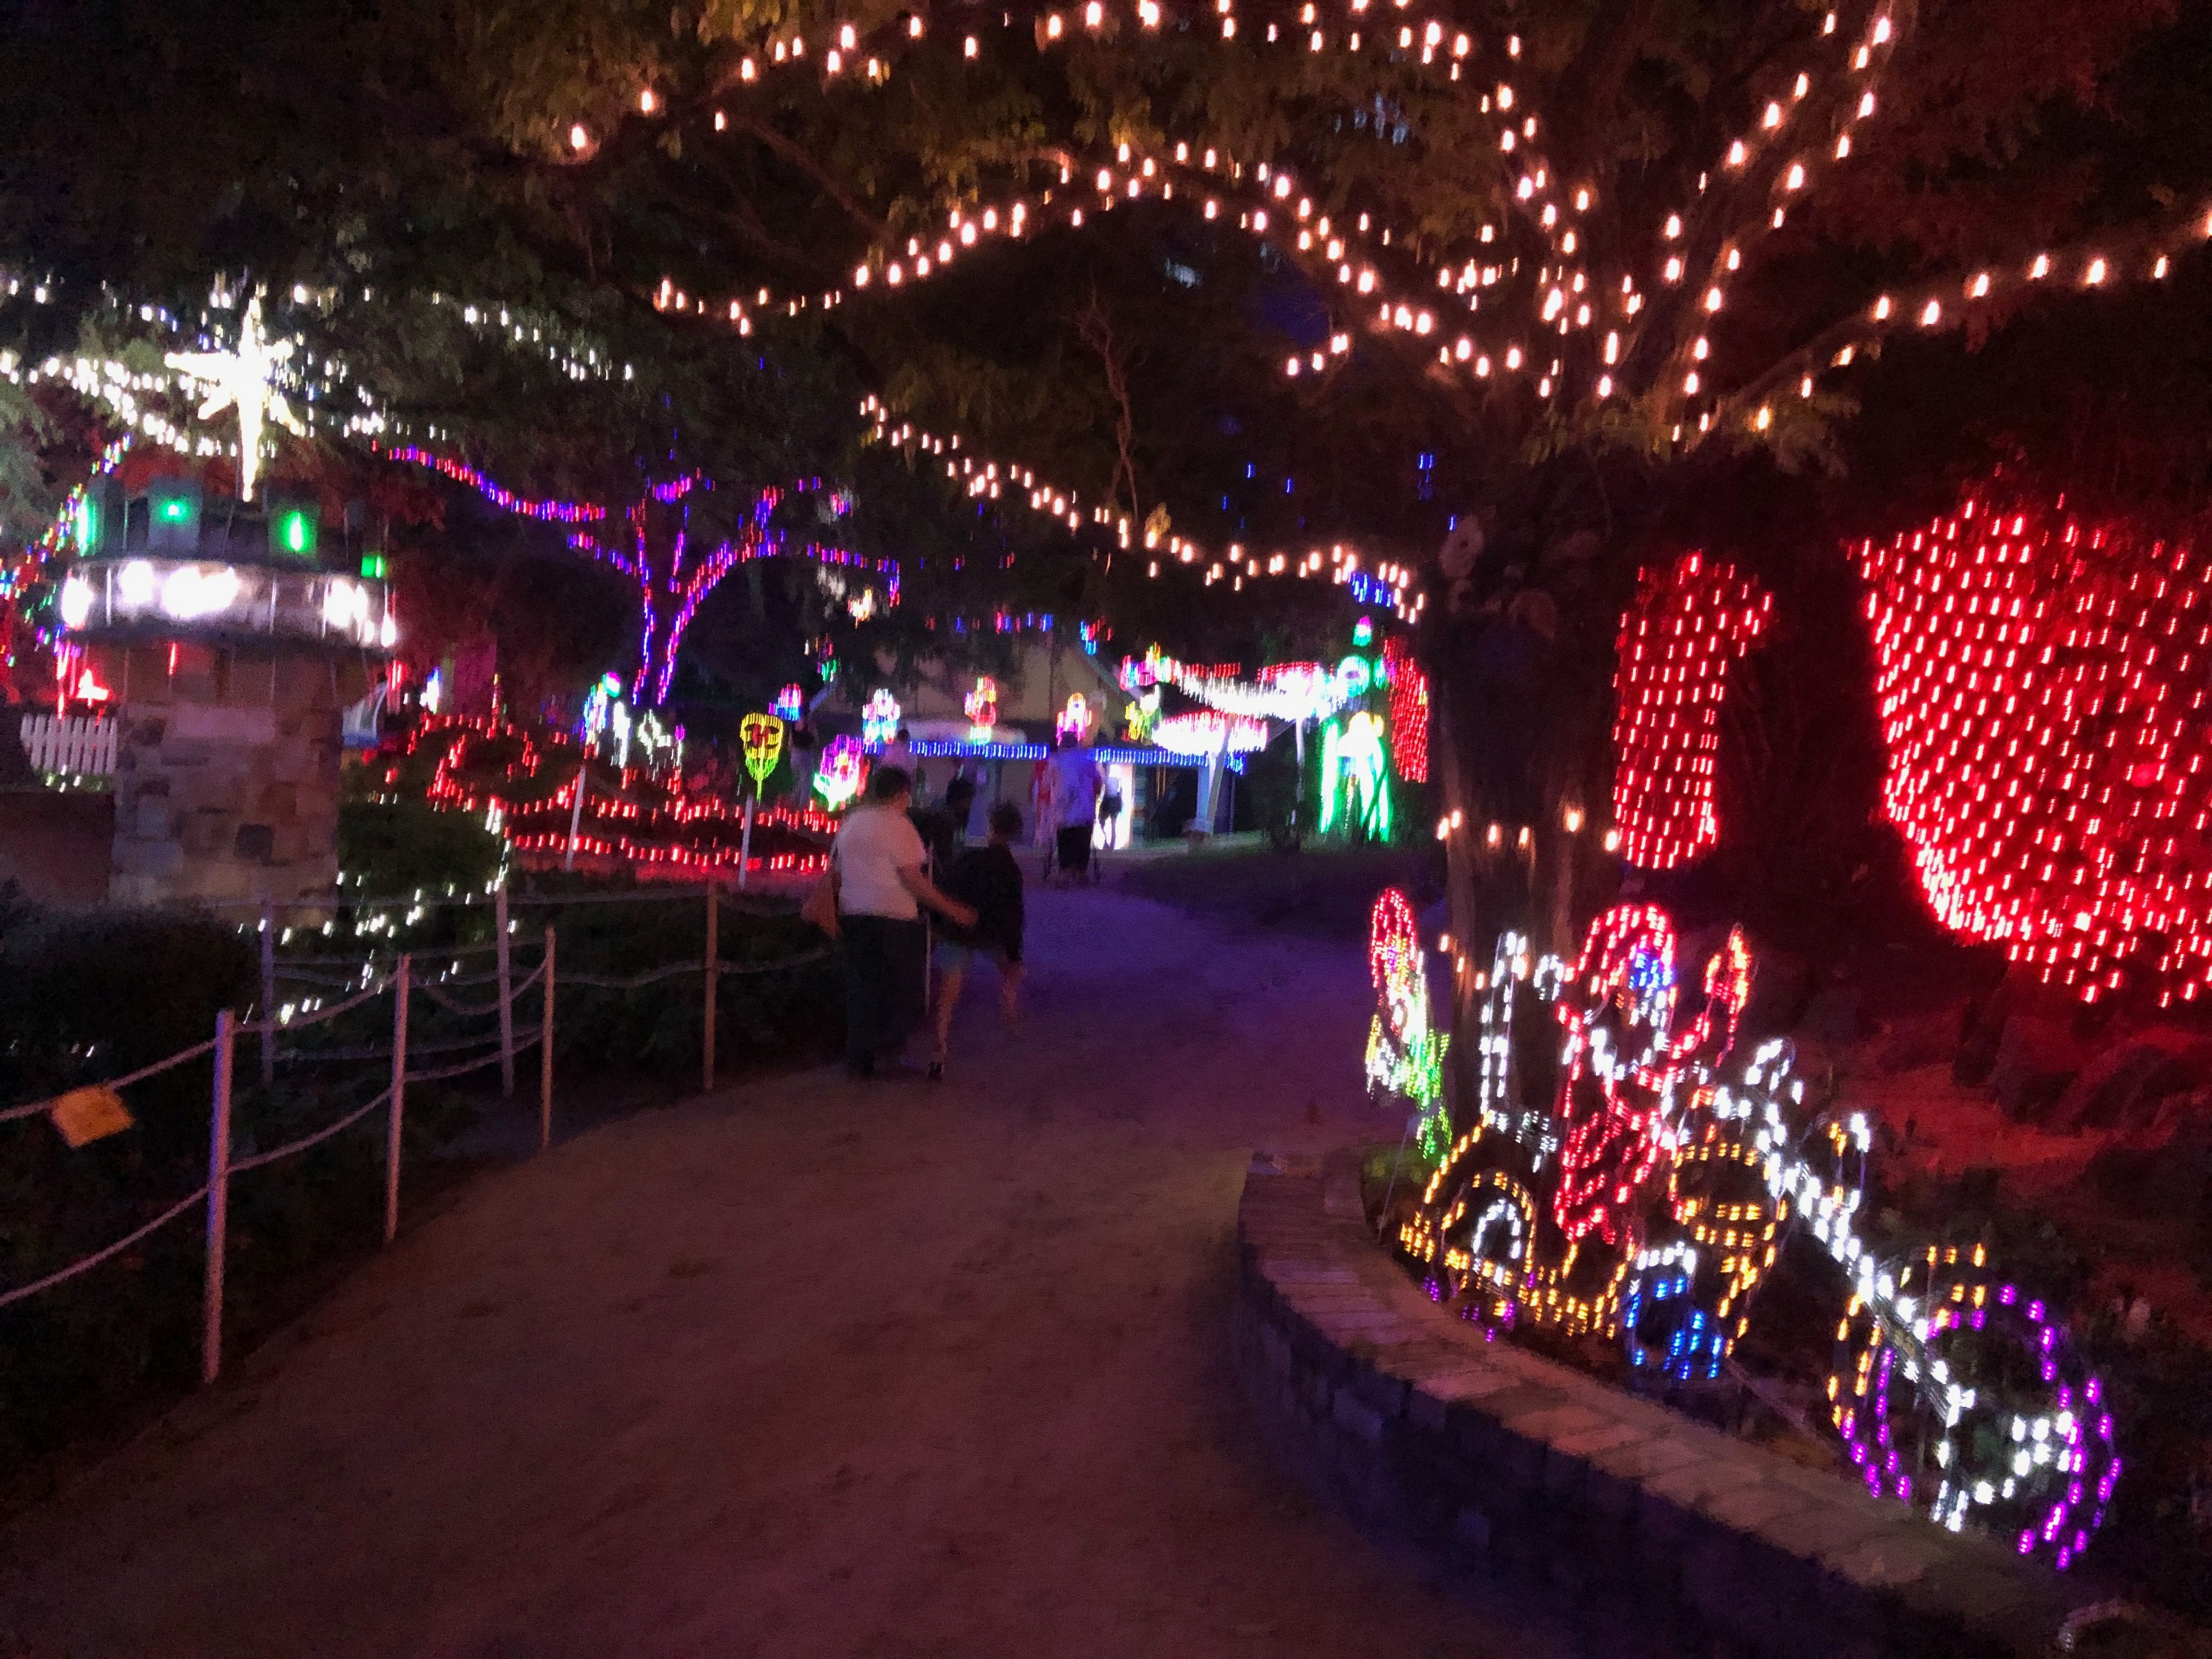 Hunter Valley Gardens Christmas Lights 2018-2019 Public Day Night Tour Image -5c149f3b3aa7f